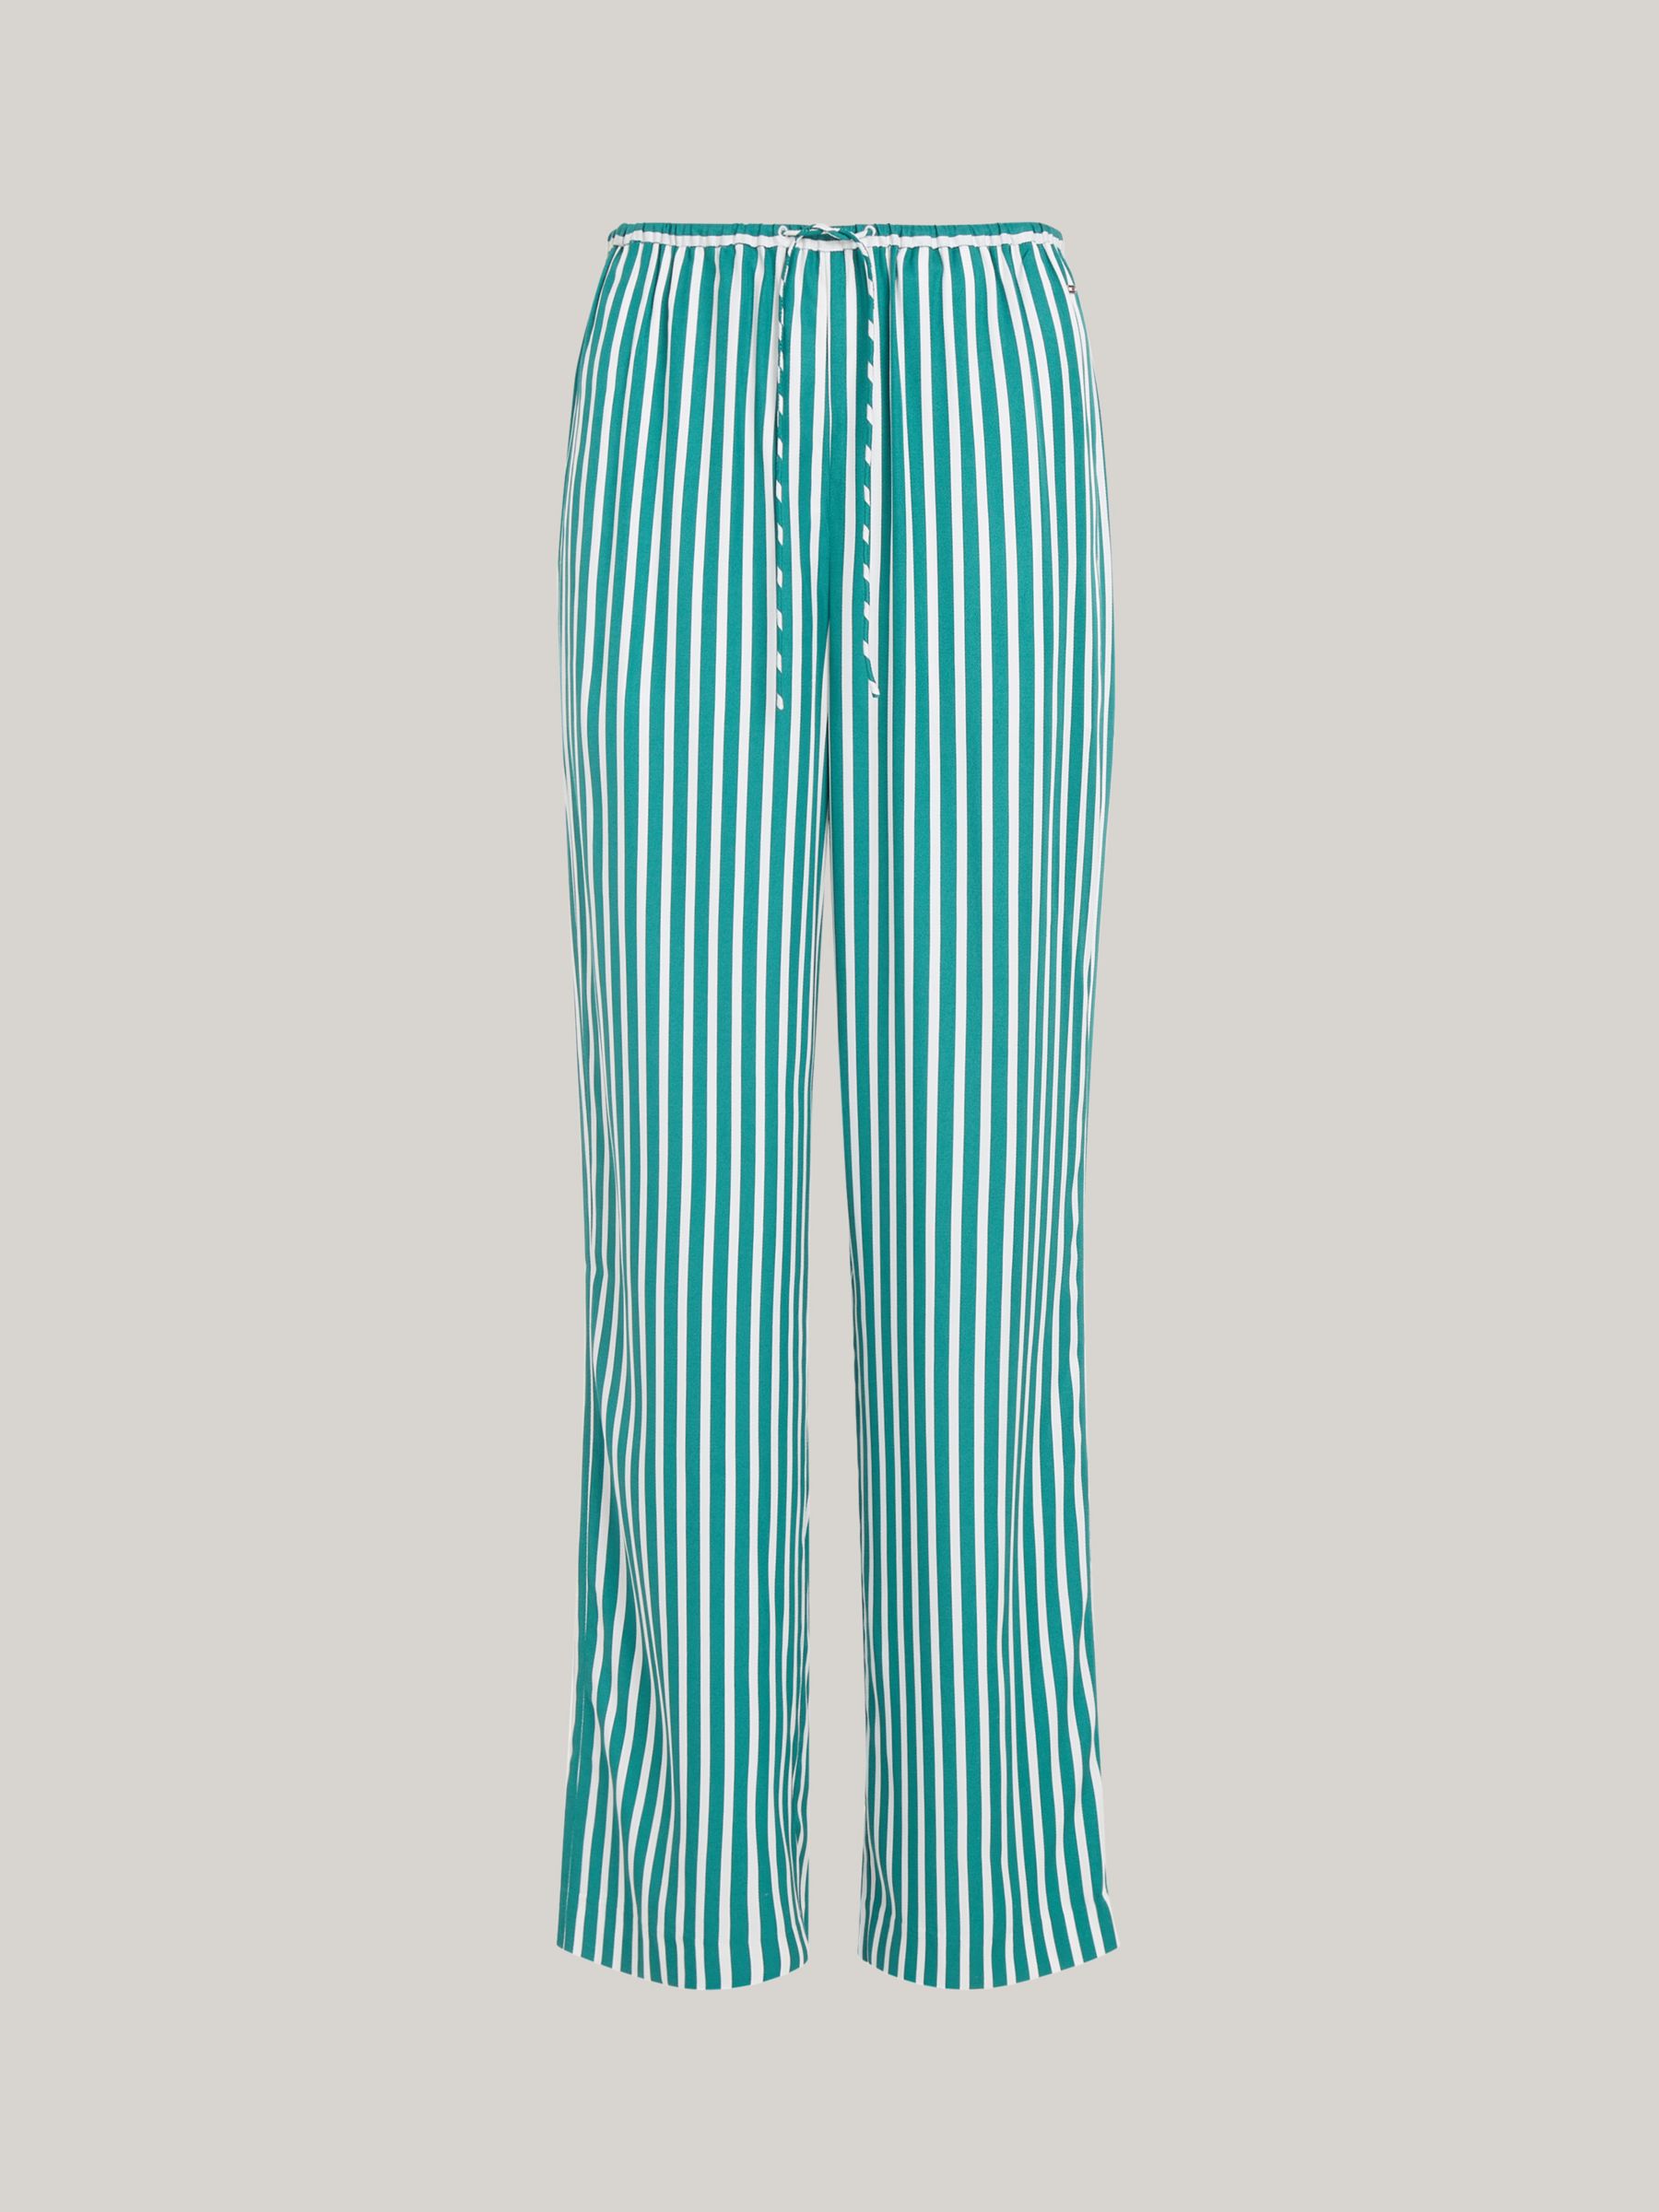 Tommy Hilfiger Fluid Stripe Trousers, Green/White, 6